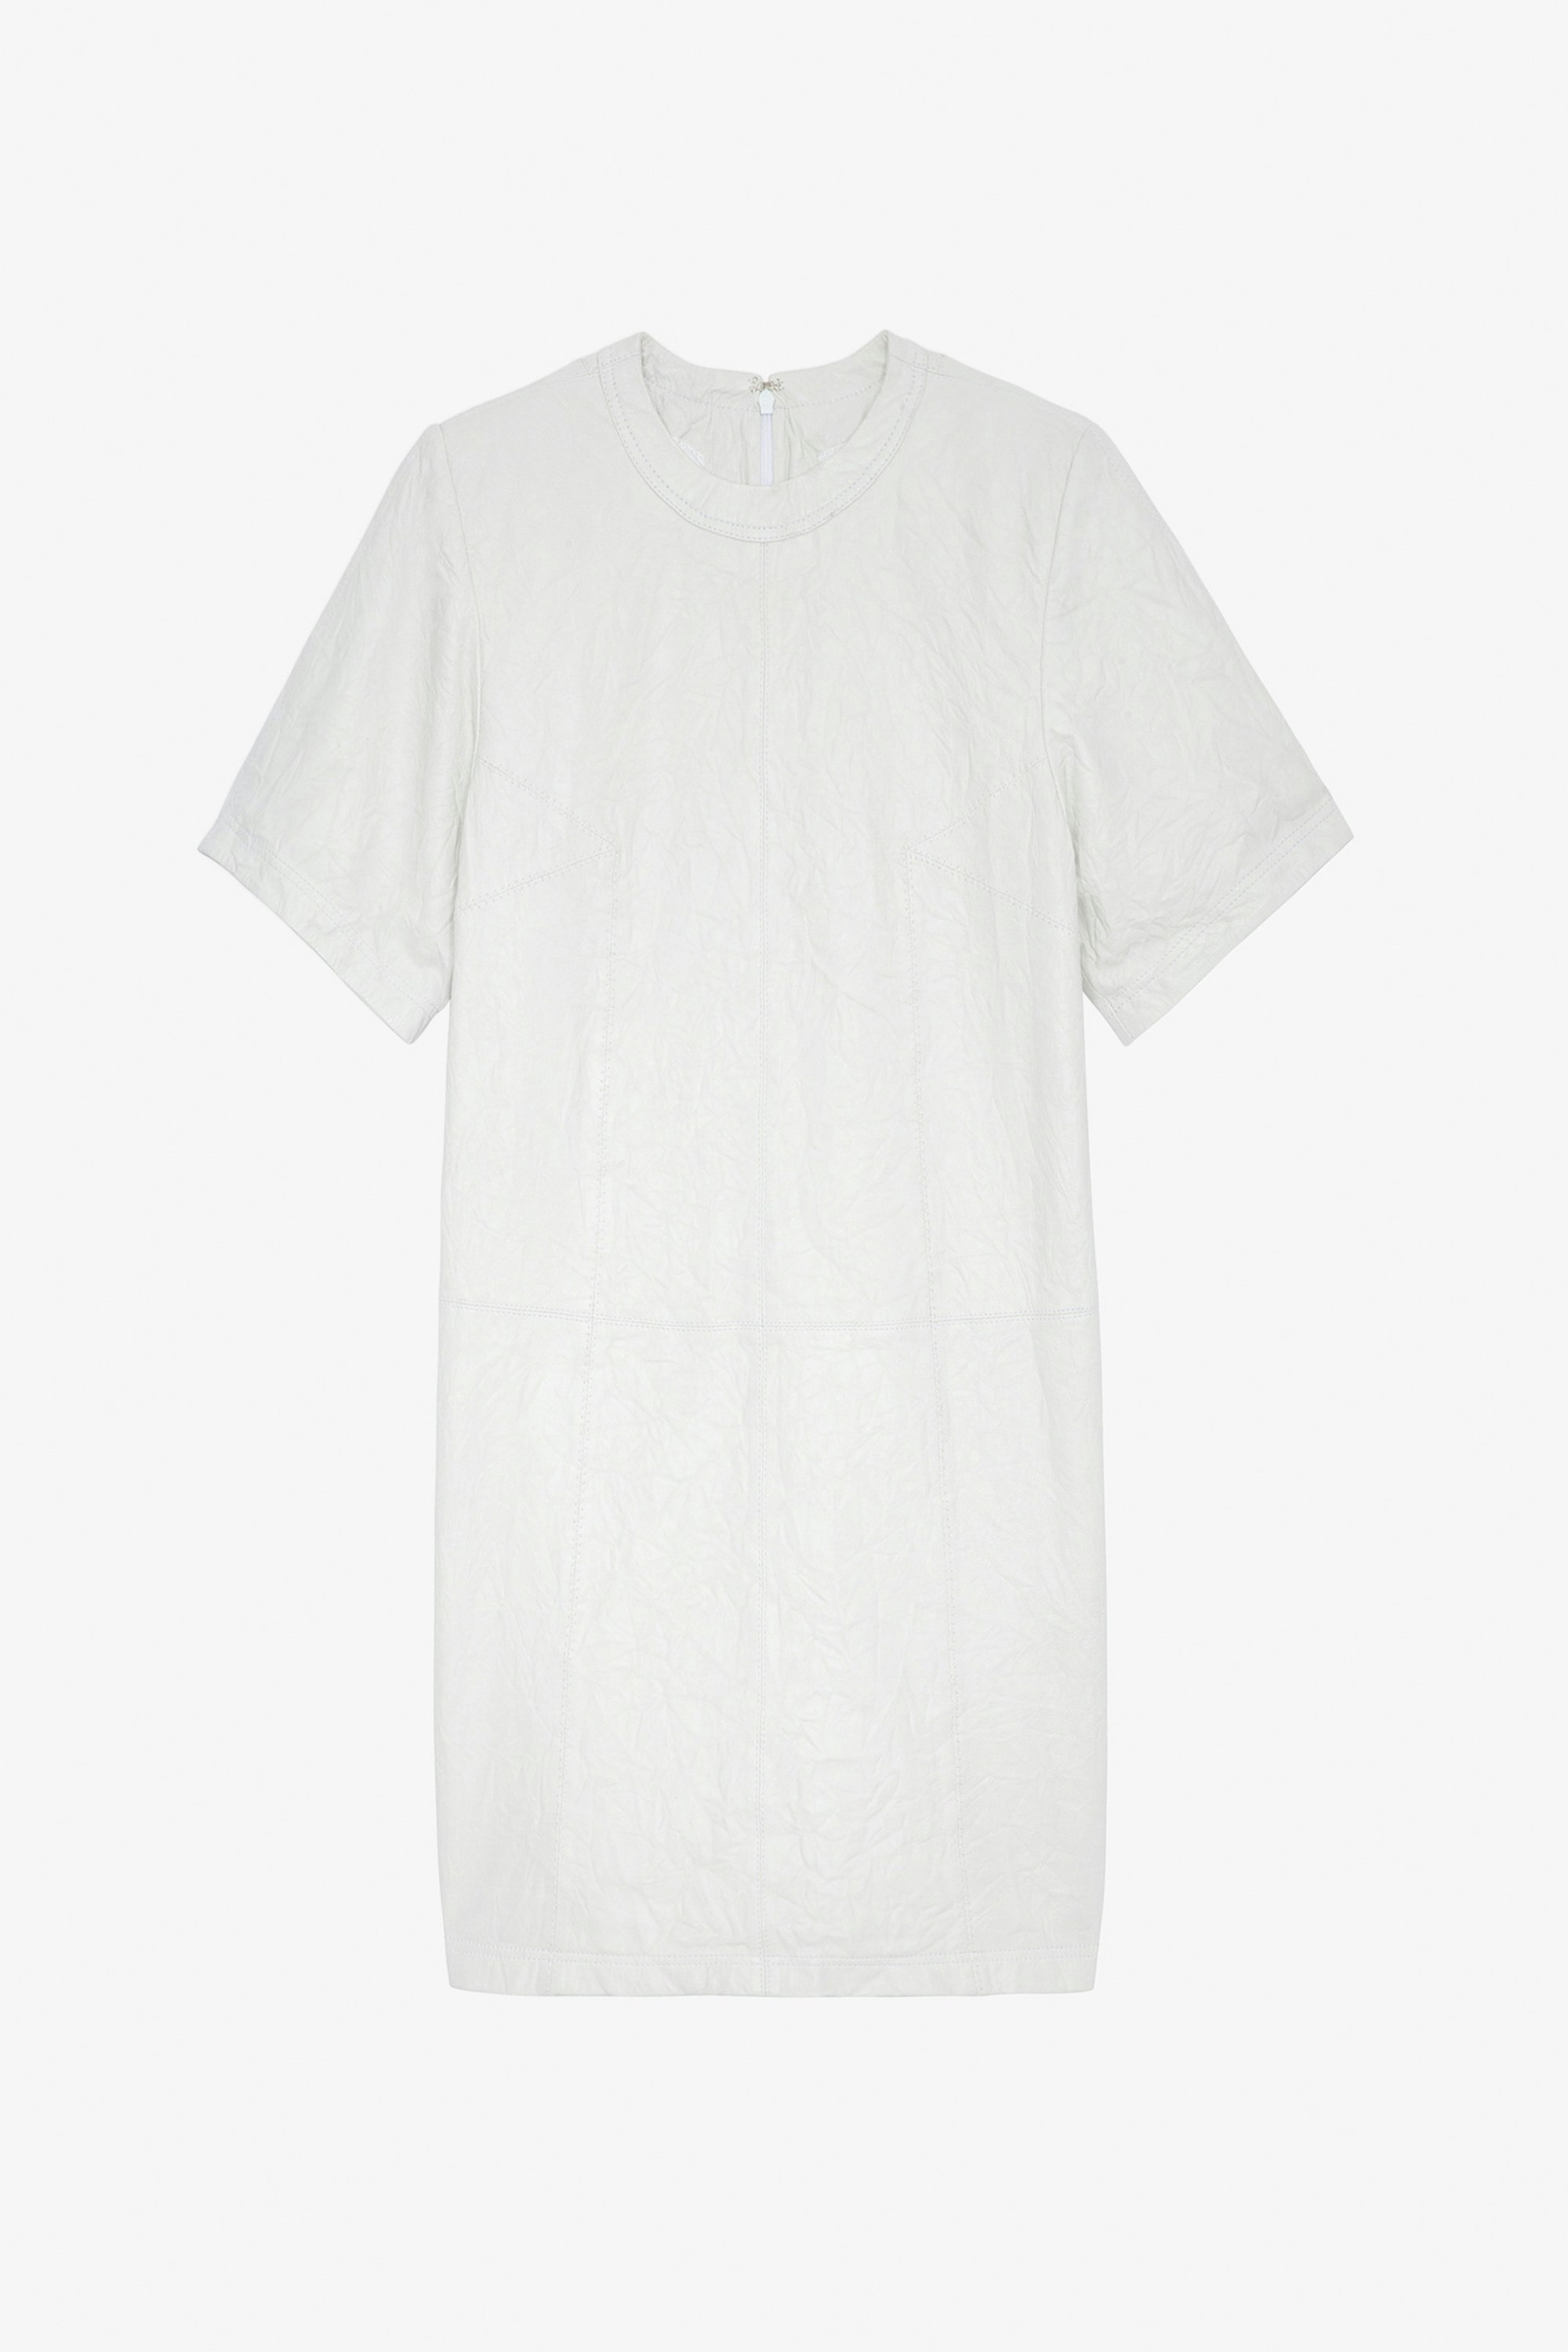 Riddy Crinkled Leather Dress - Women’s short white crinkled leather dress with short sleeves.